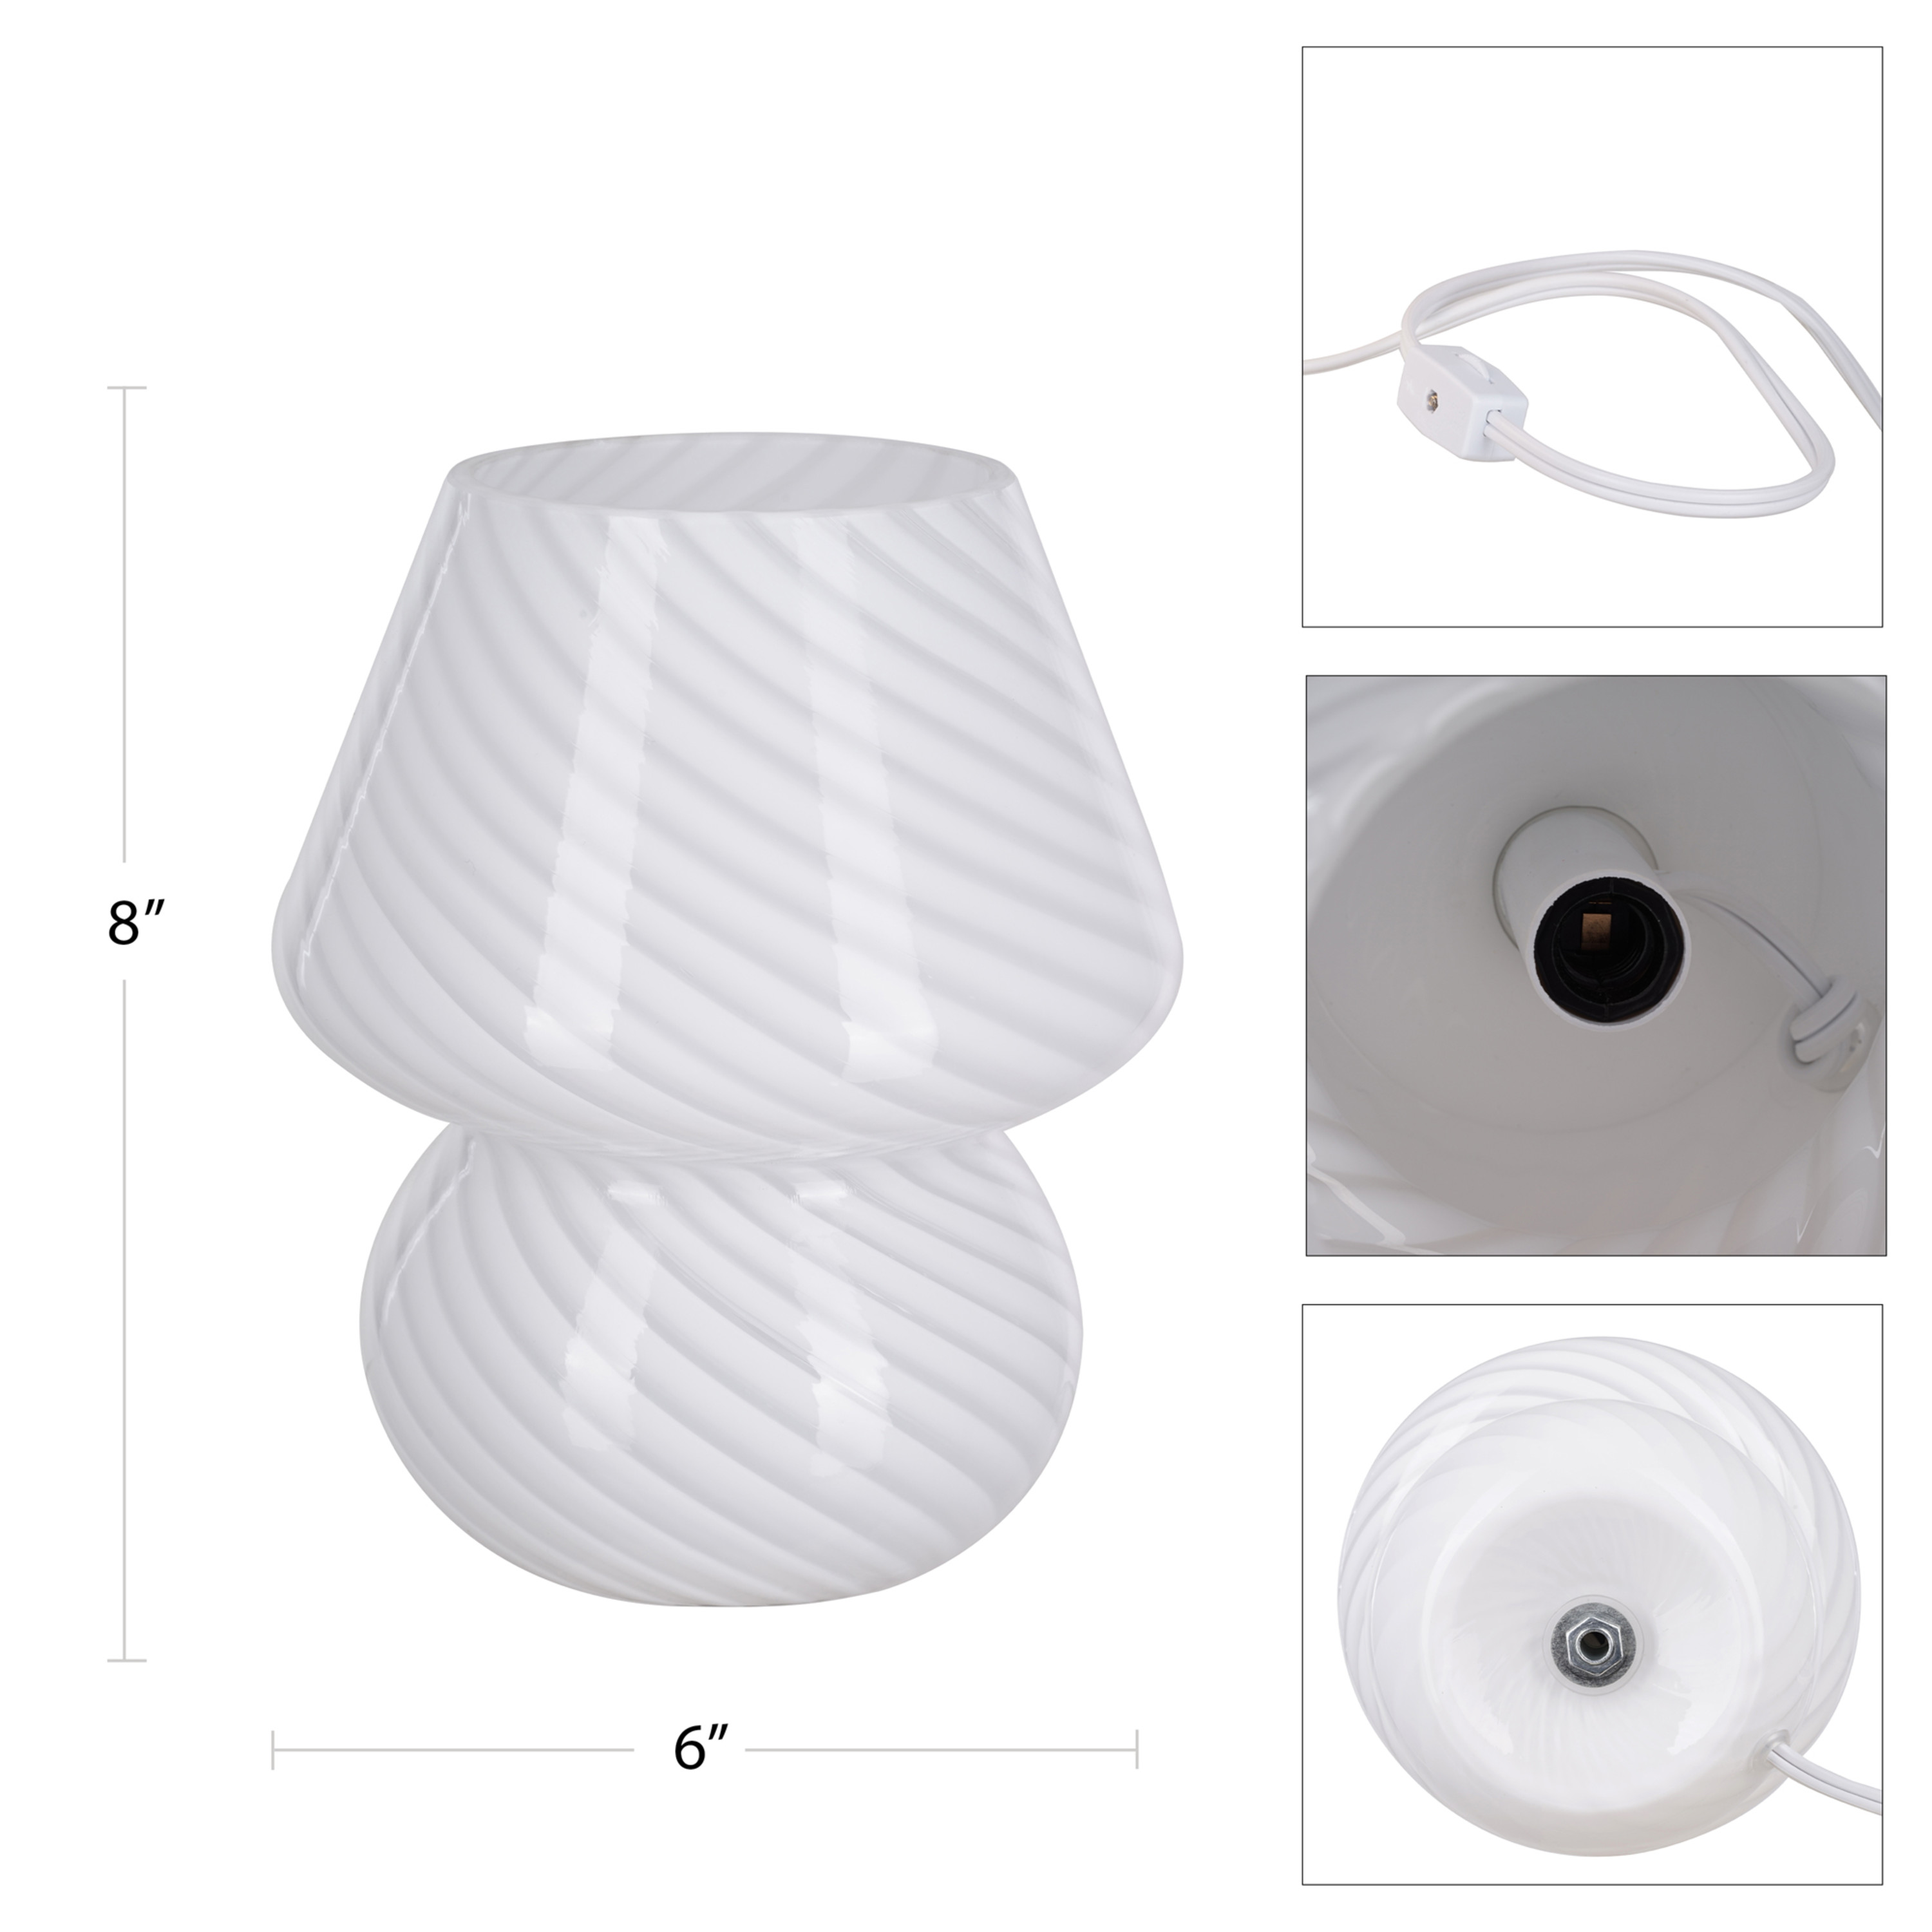 8" Glass Mushroom Lamp, White Stripe, Glossy Finish - image 4 of 12